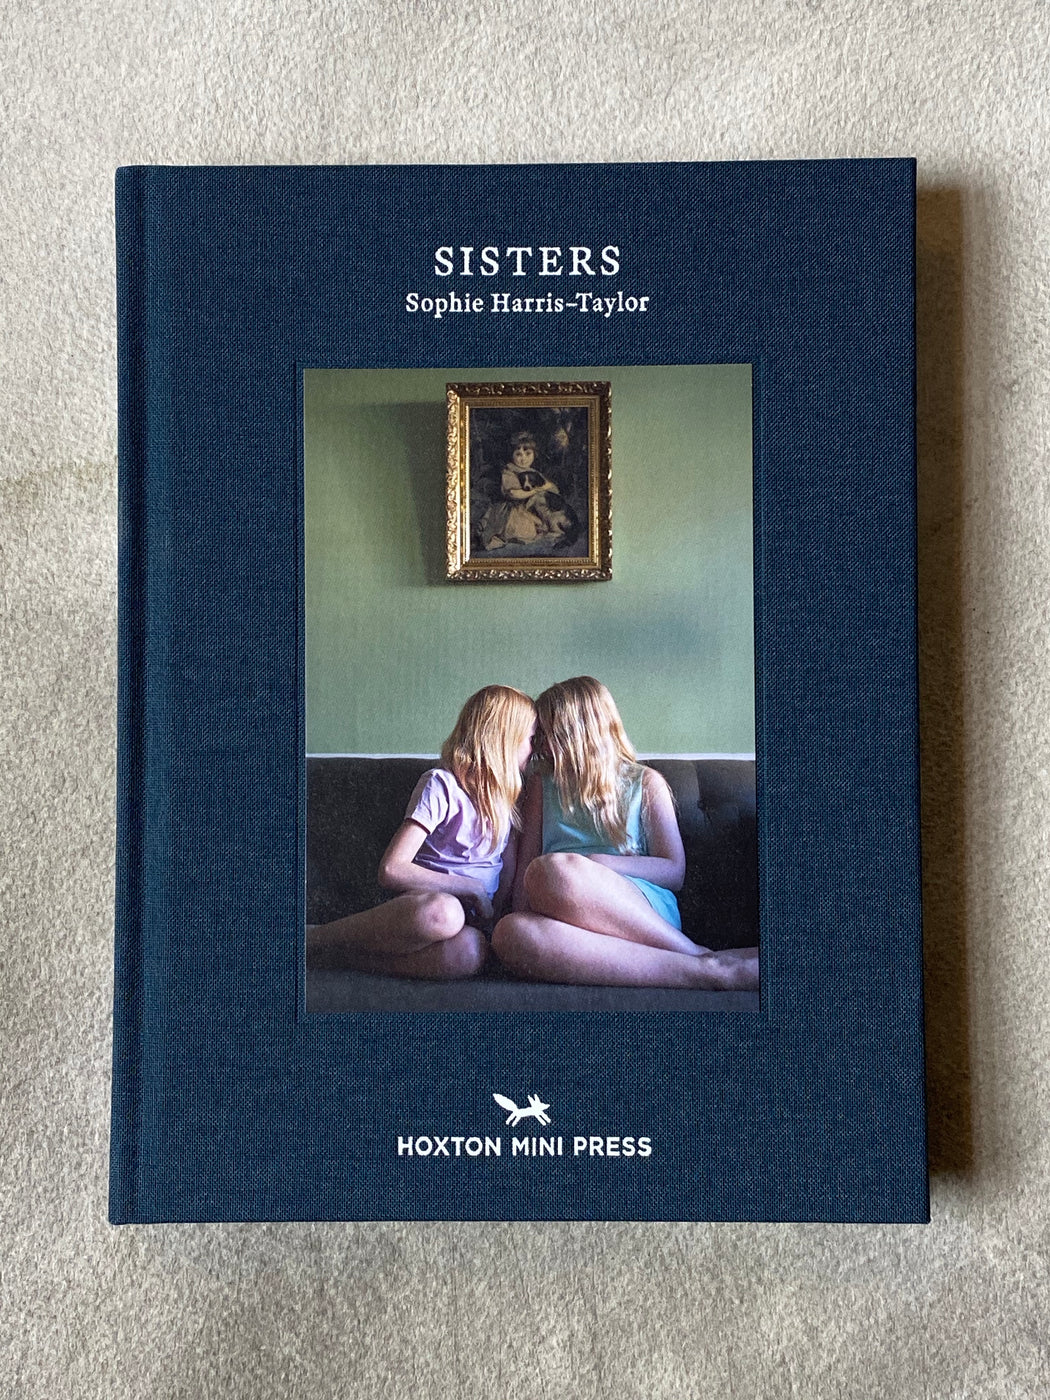 "Sisters" by Sophie Harris-Taylor